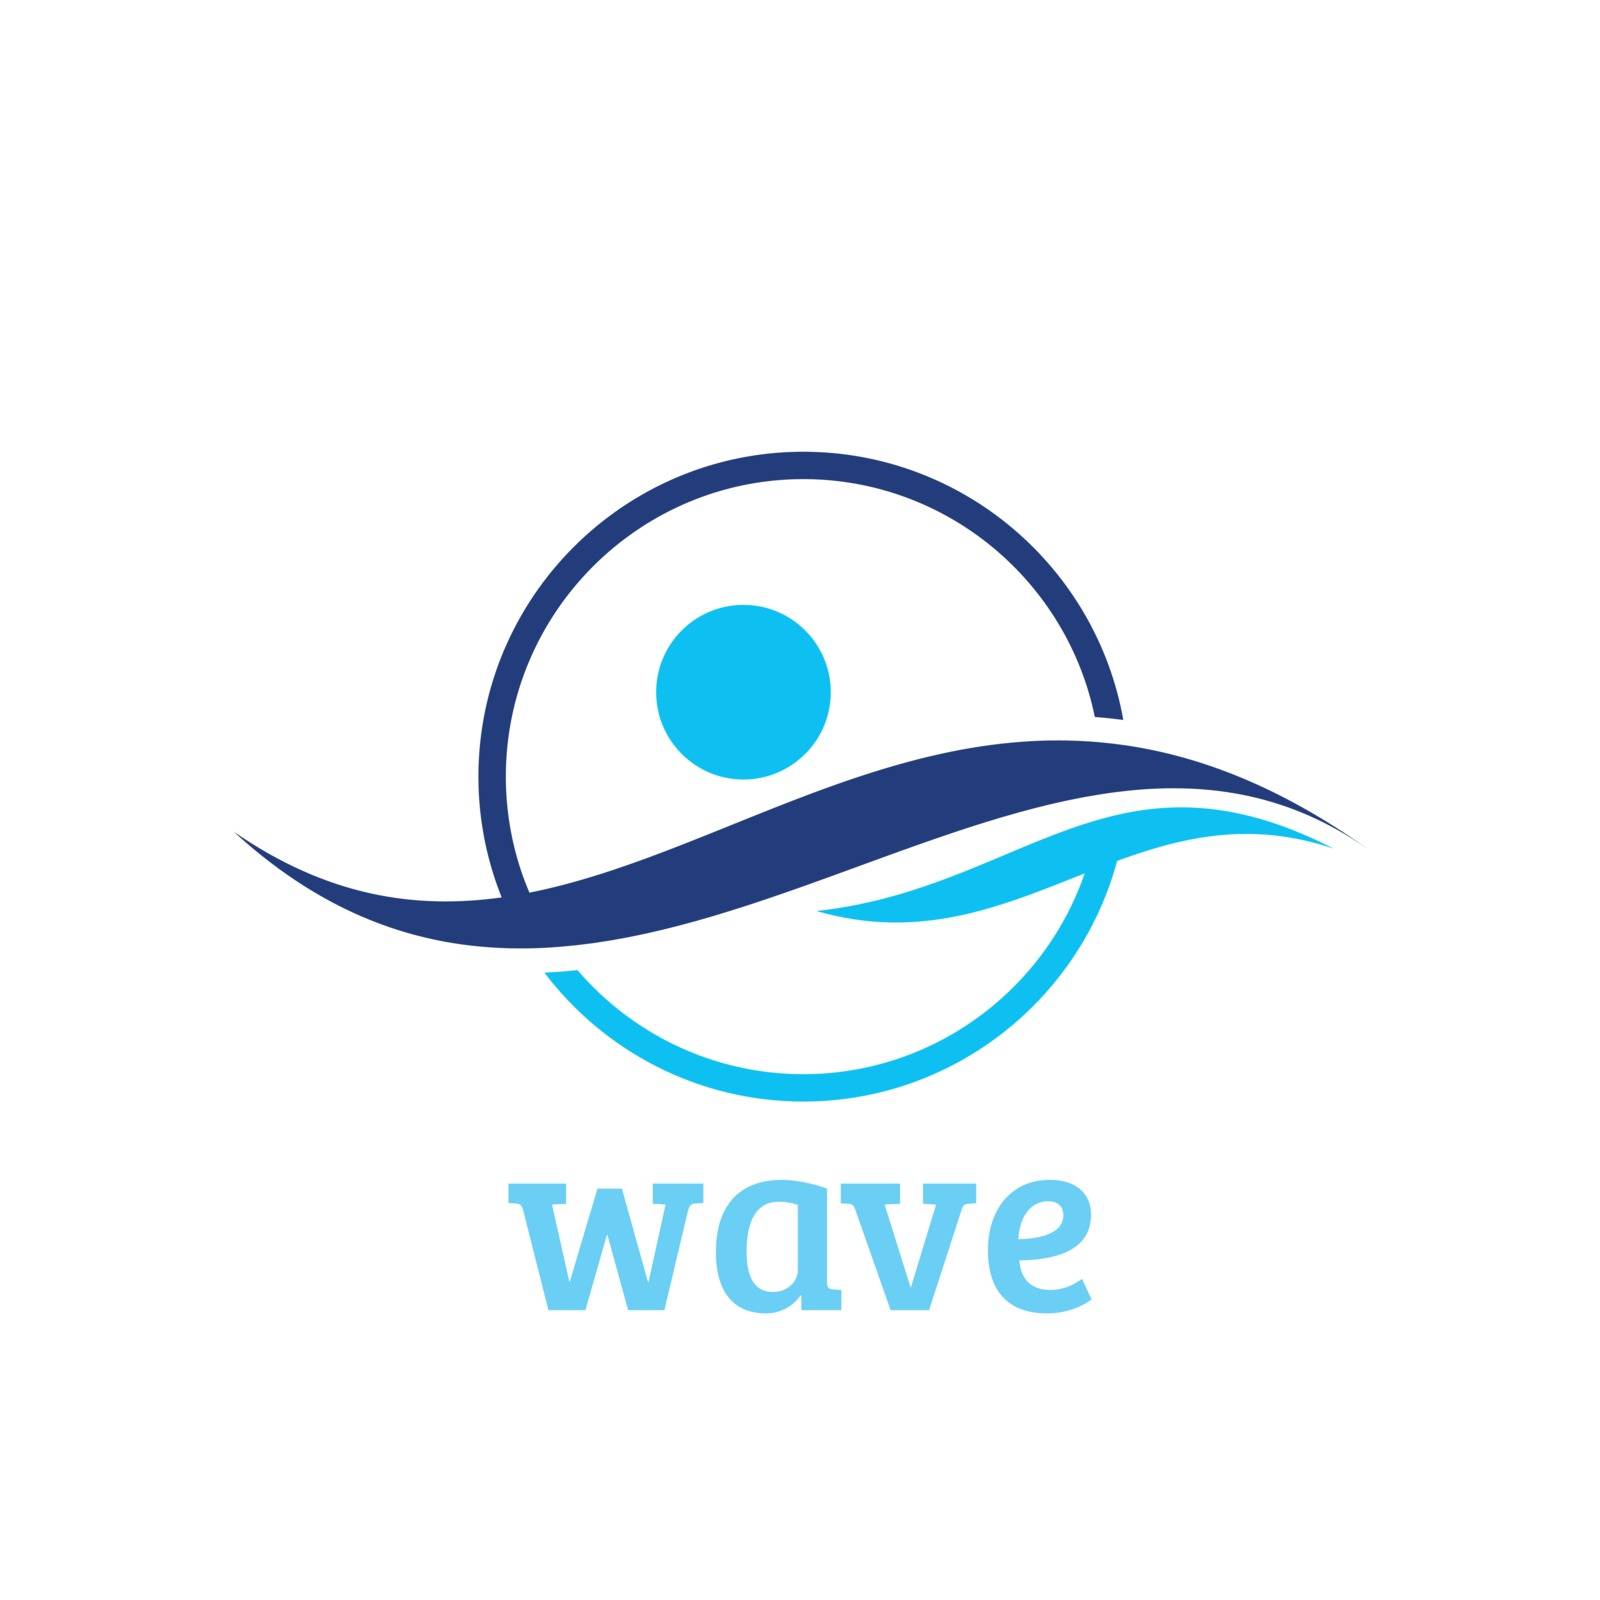 Water wave logo design template, water drop, Water wave vector illustration